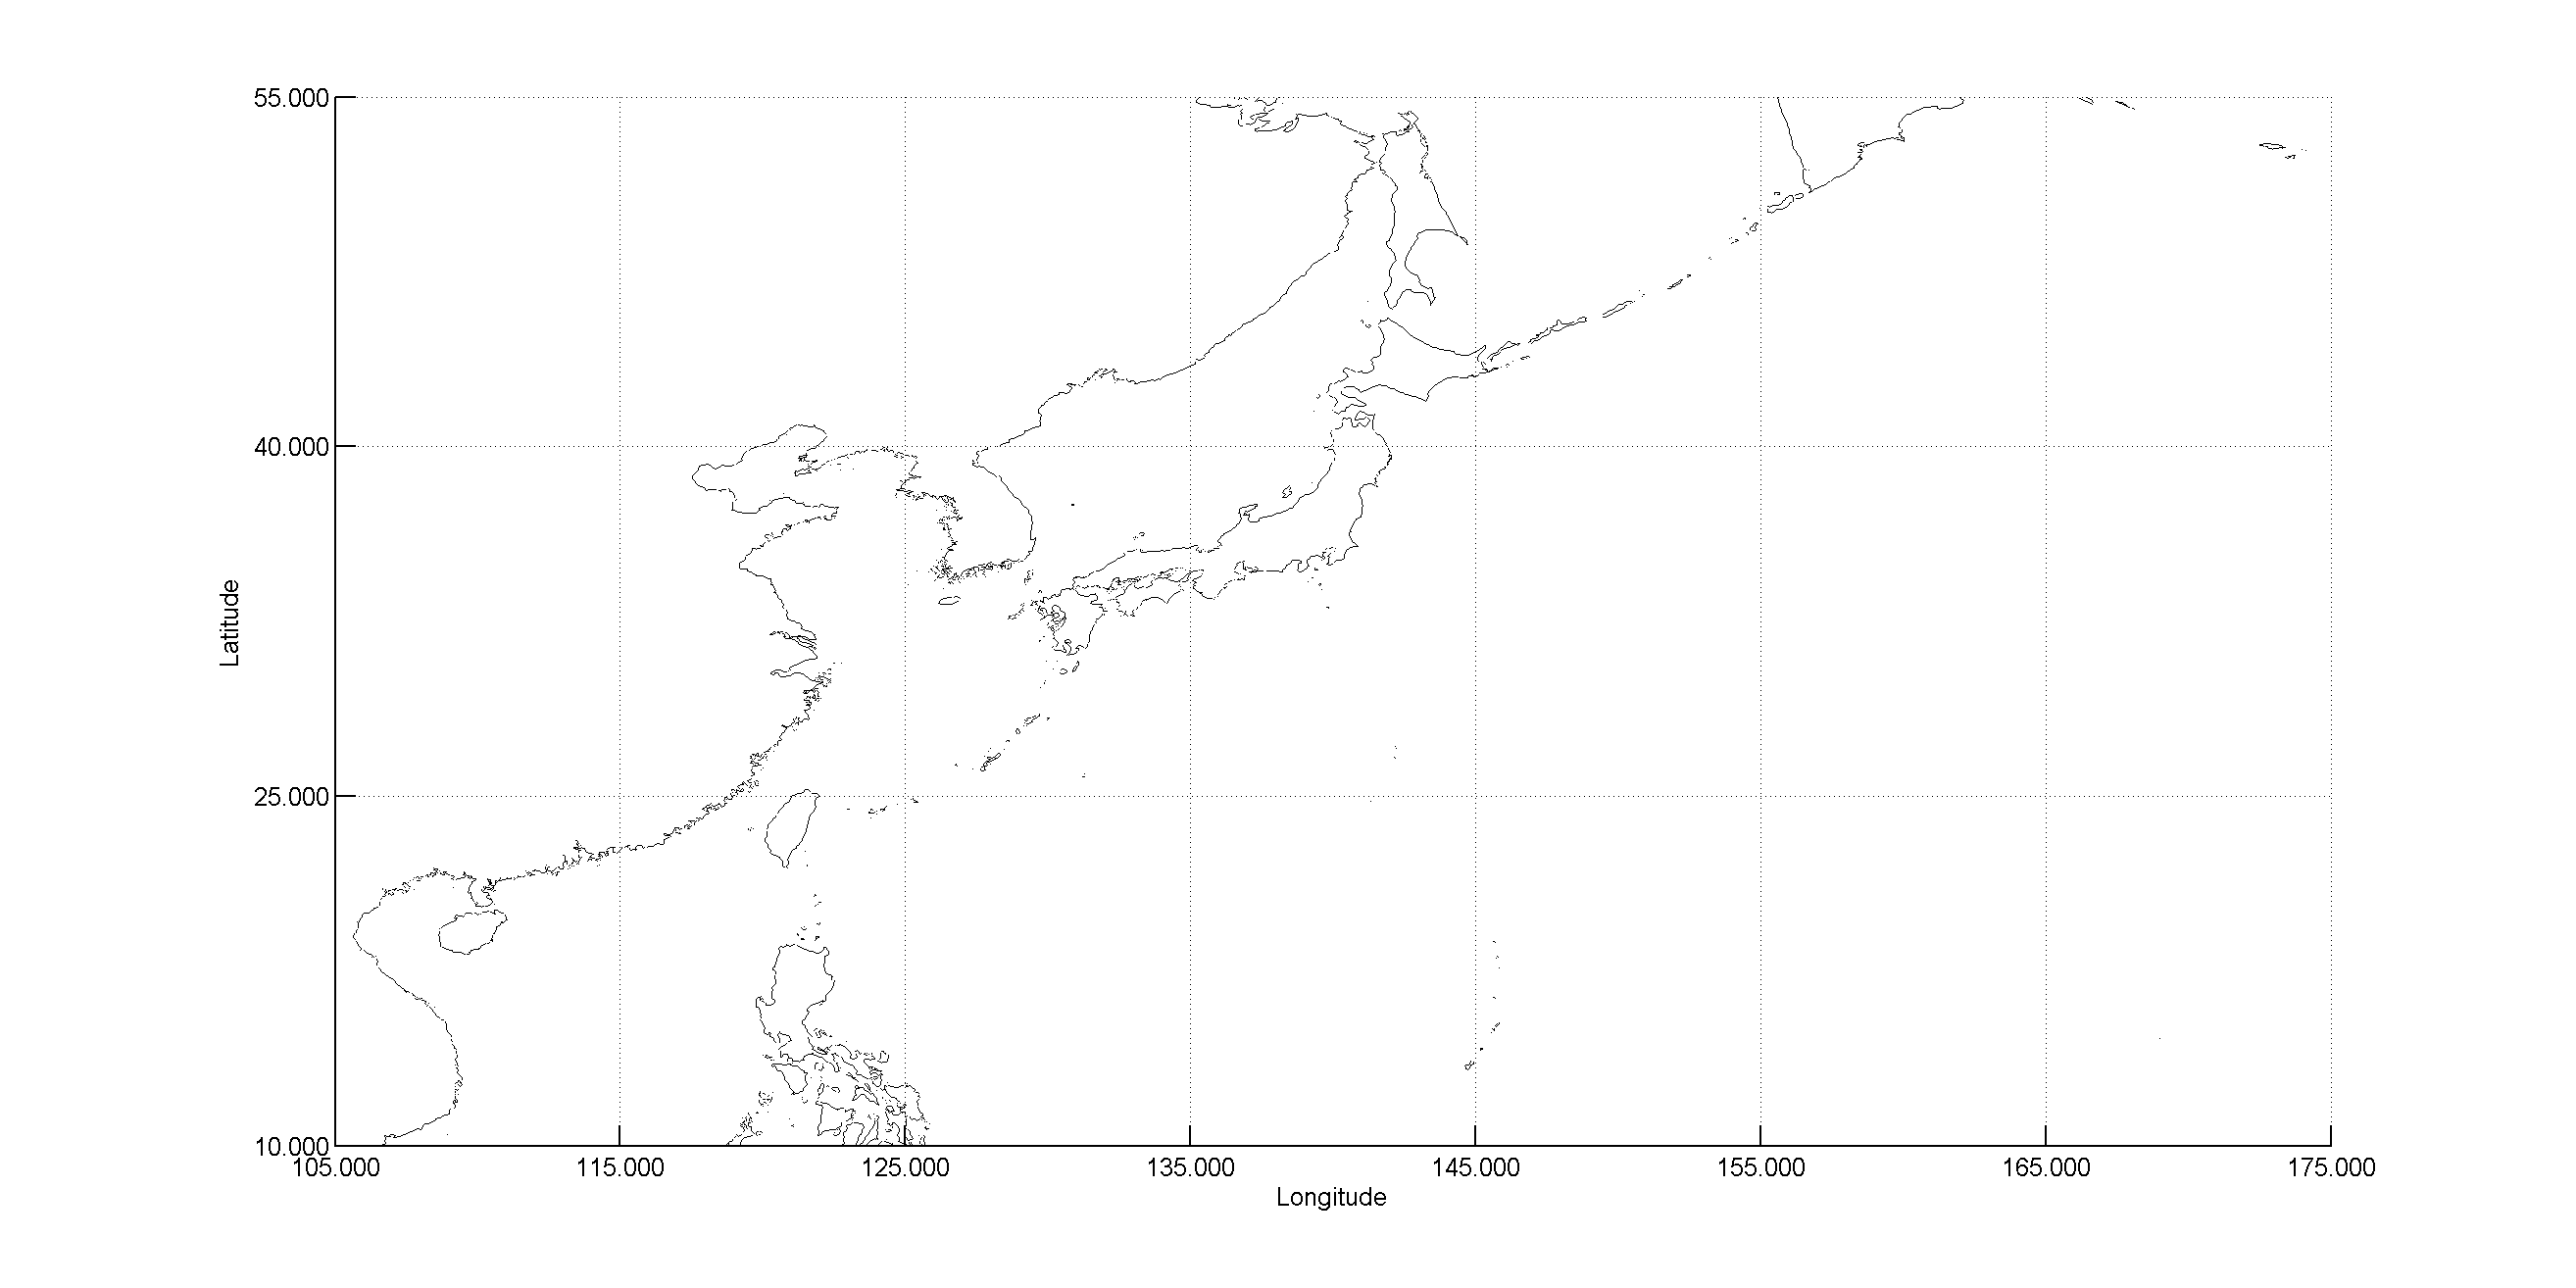 CYCLE_157 - Japan Descending passes